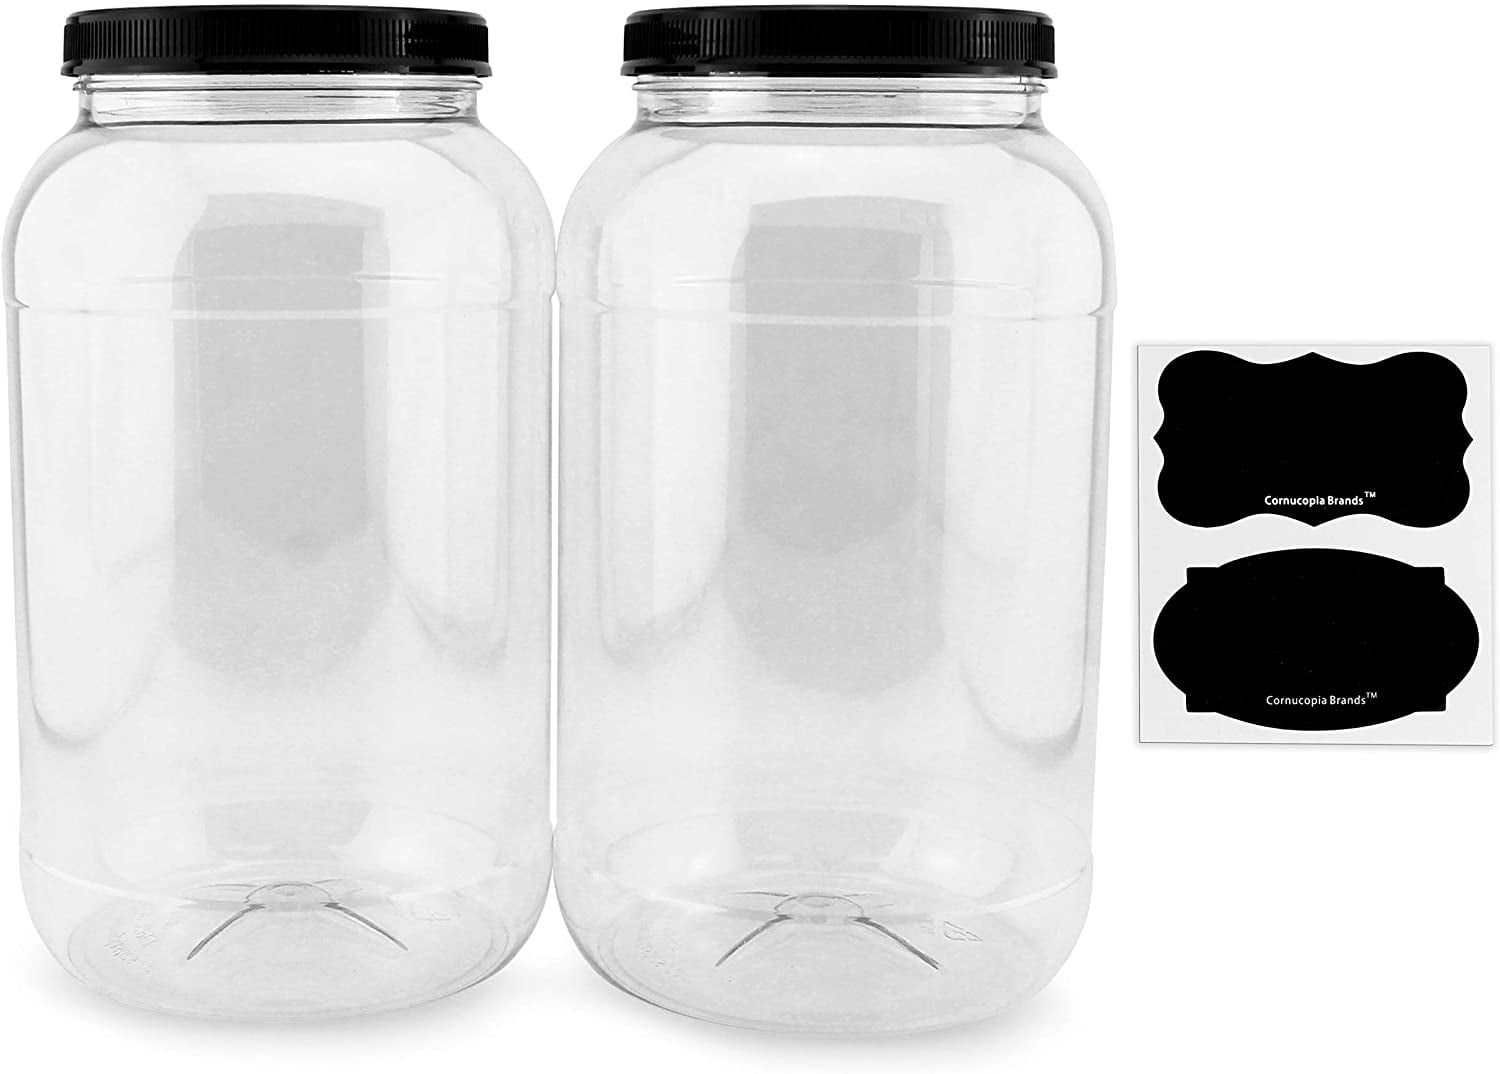 DOLLS HOUSE = Set Of 2 Empty Plastic Jars 